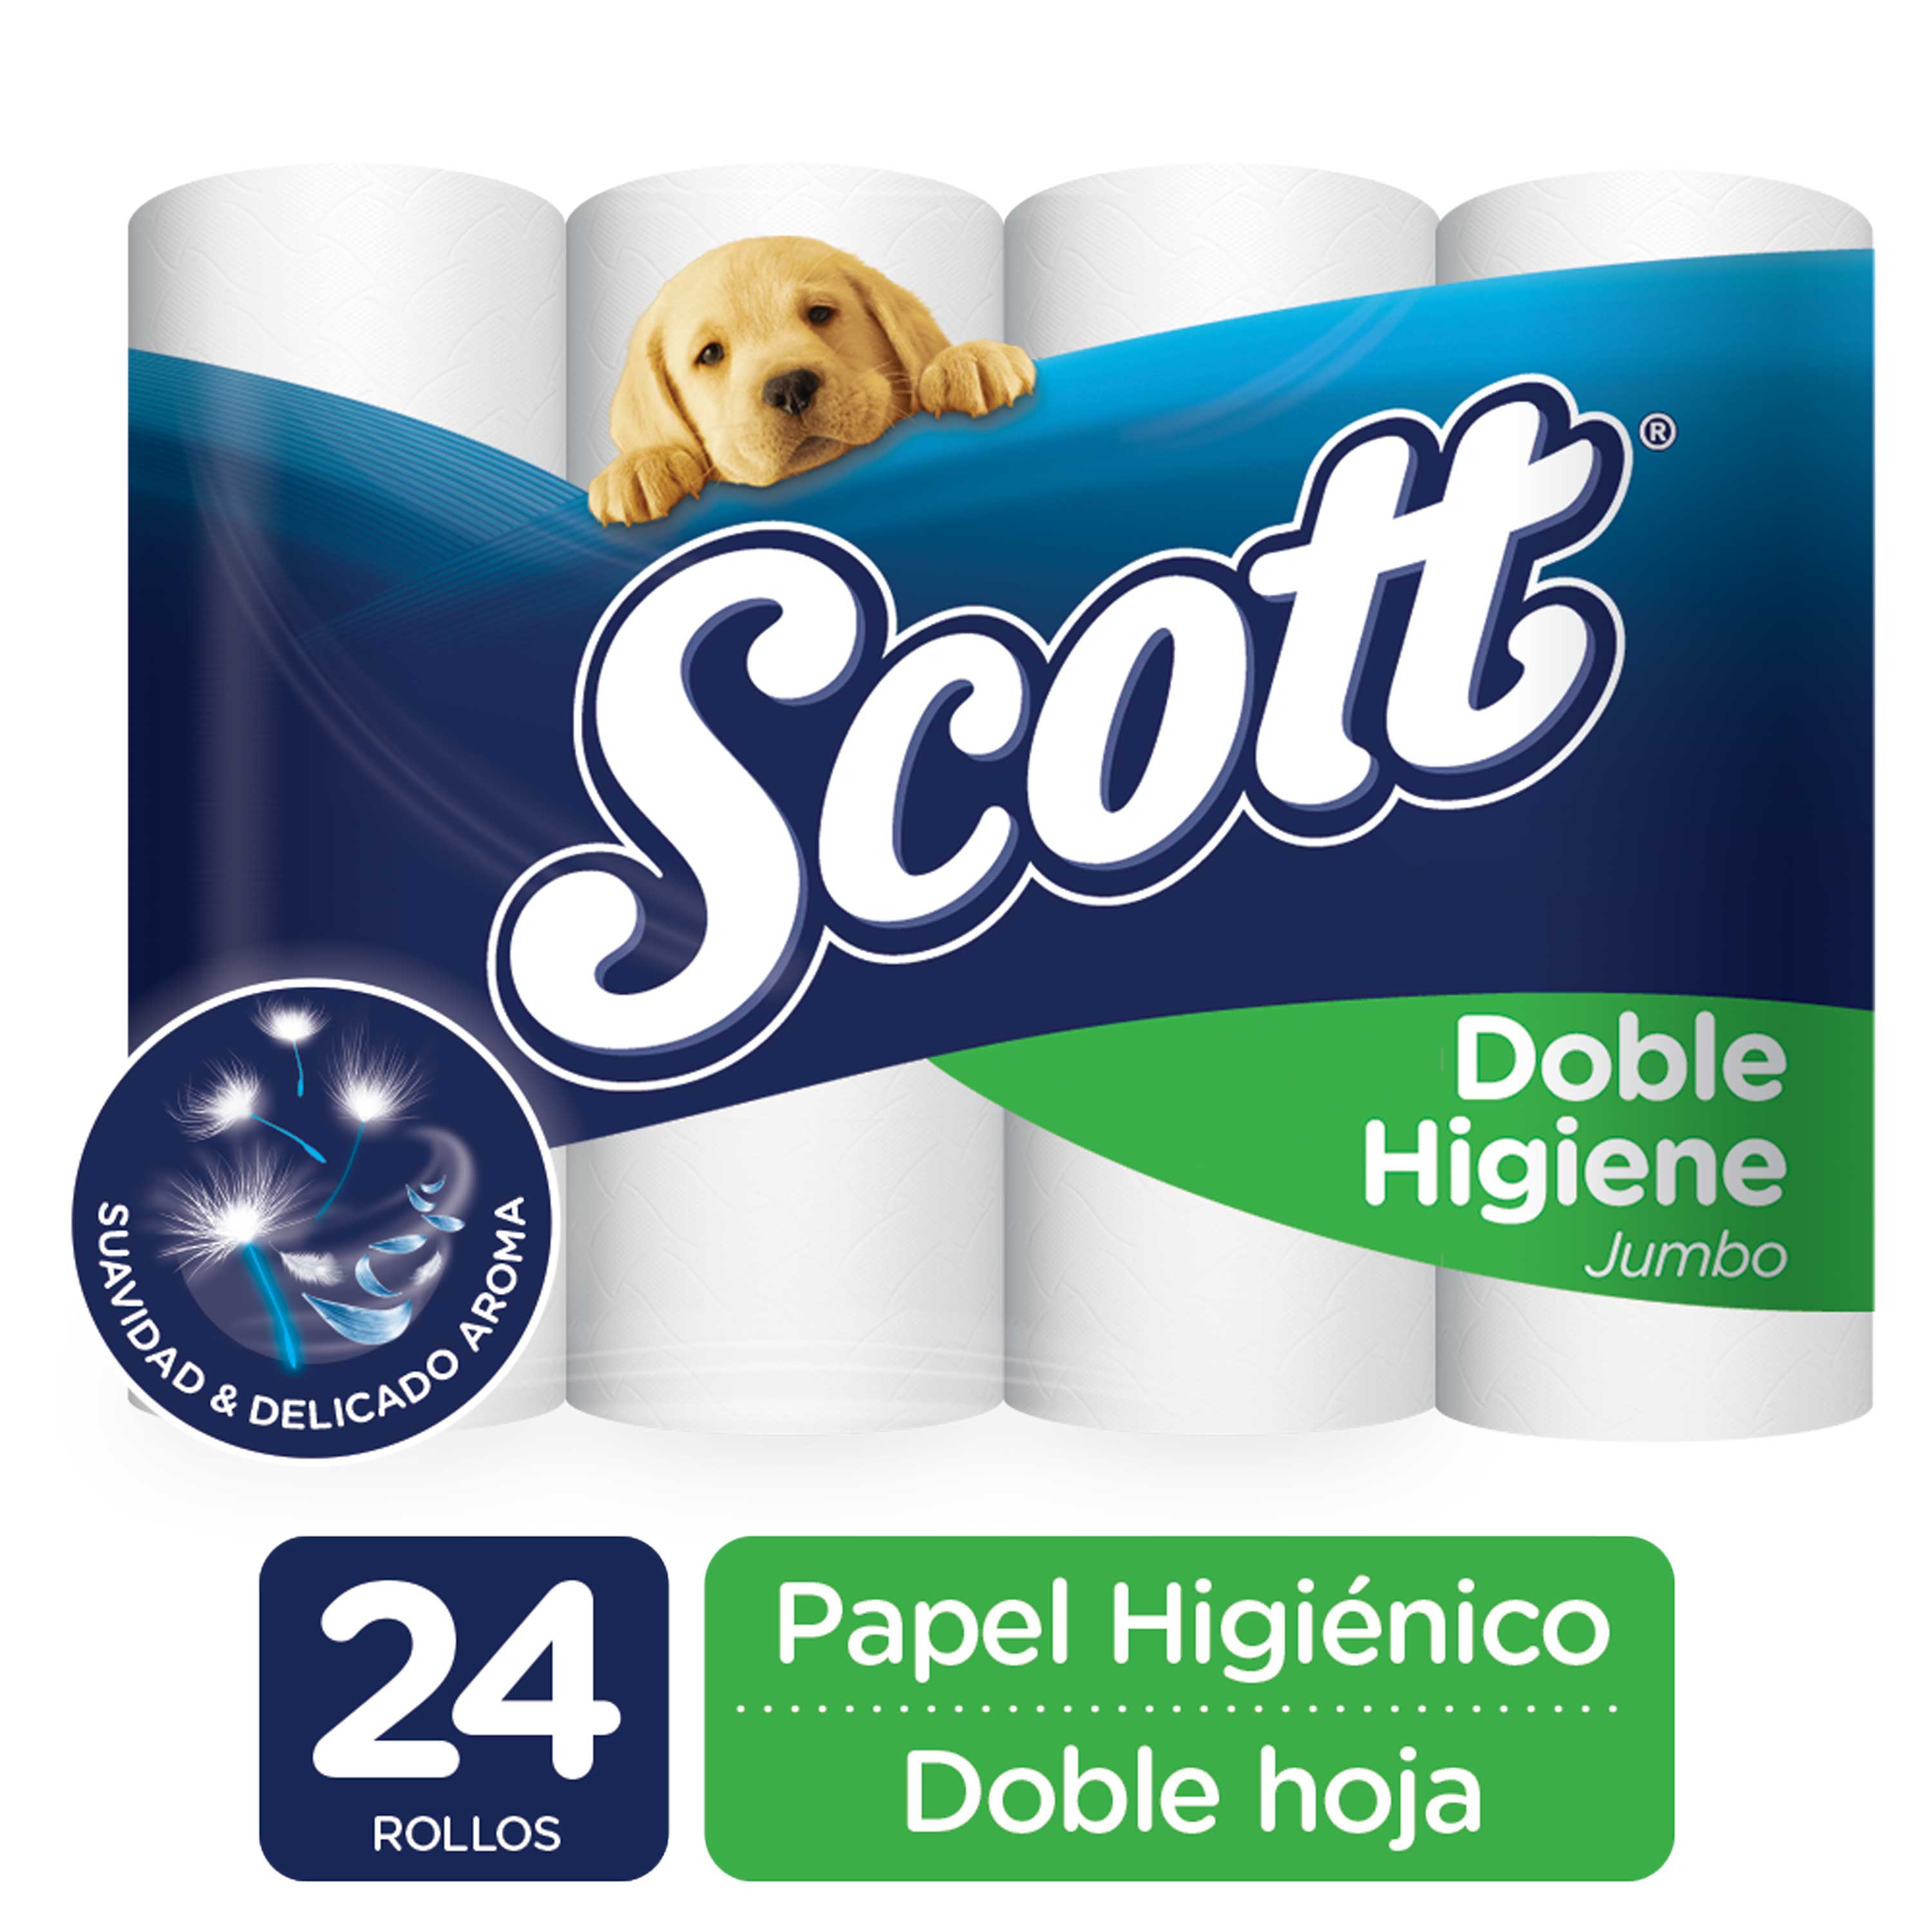 Papel Higiénico Scott Doble Higiene Hoja - 24 Rollos